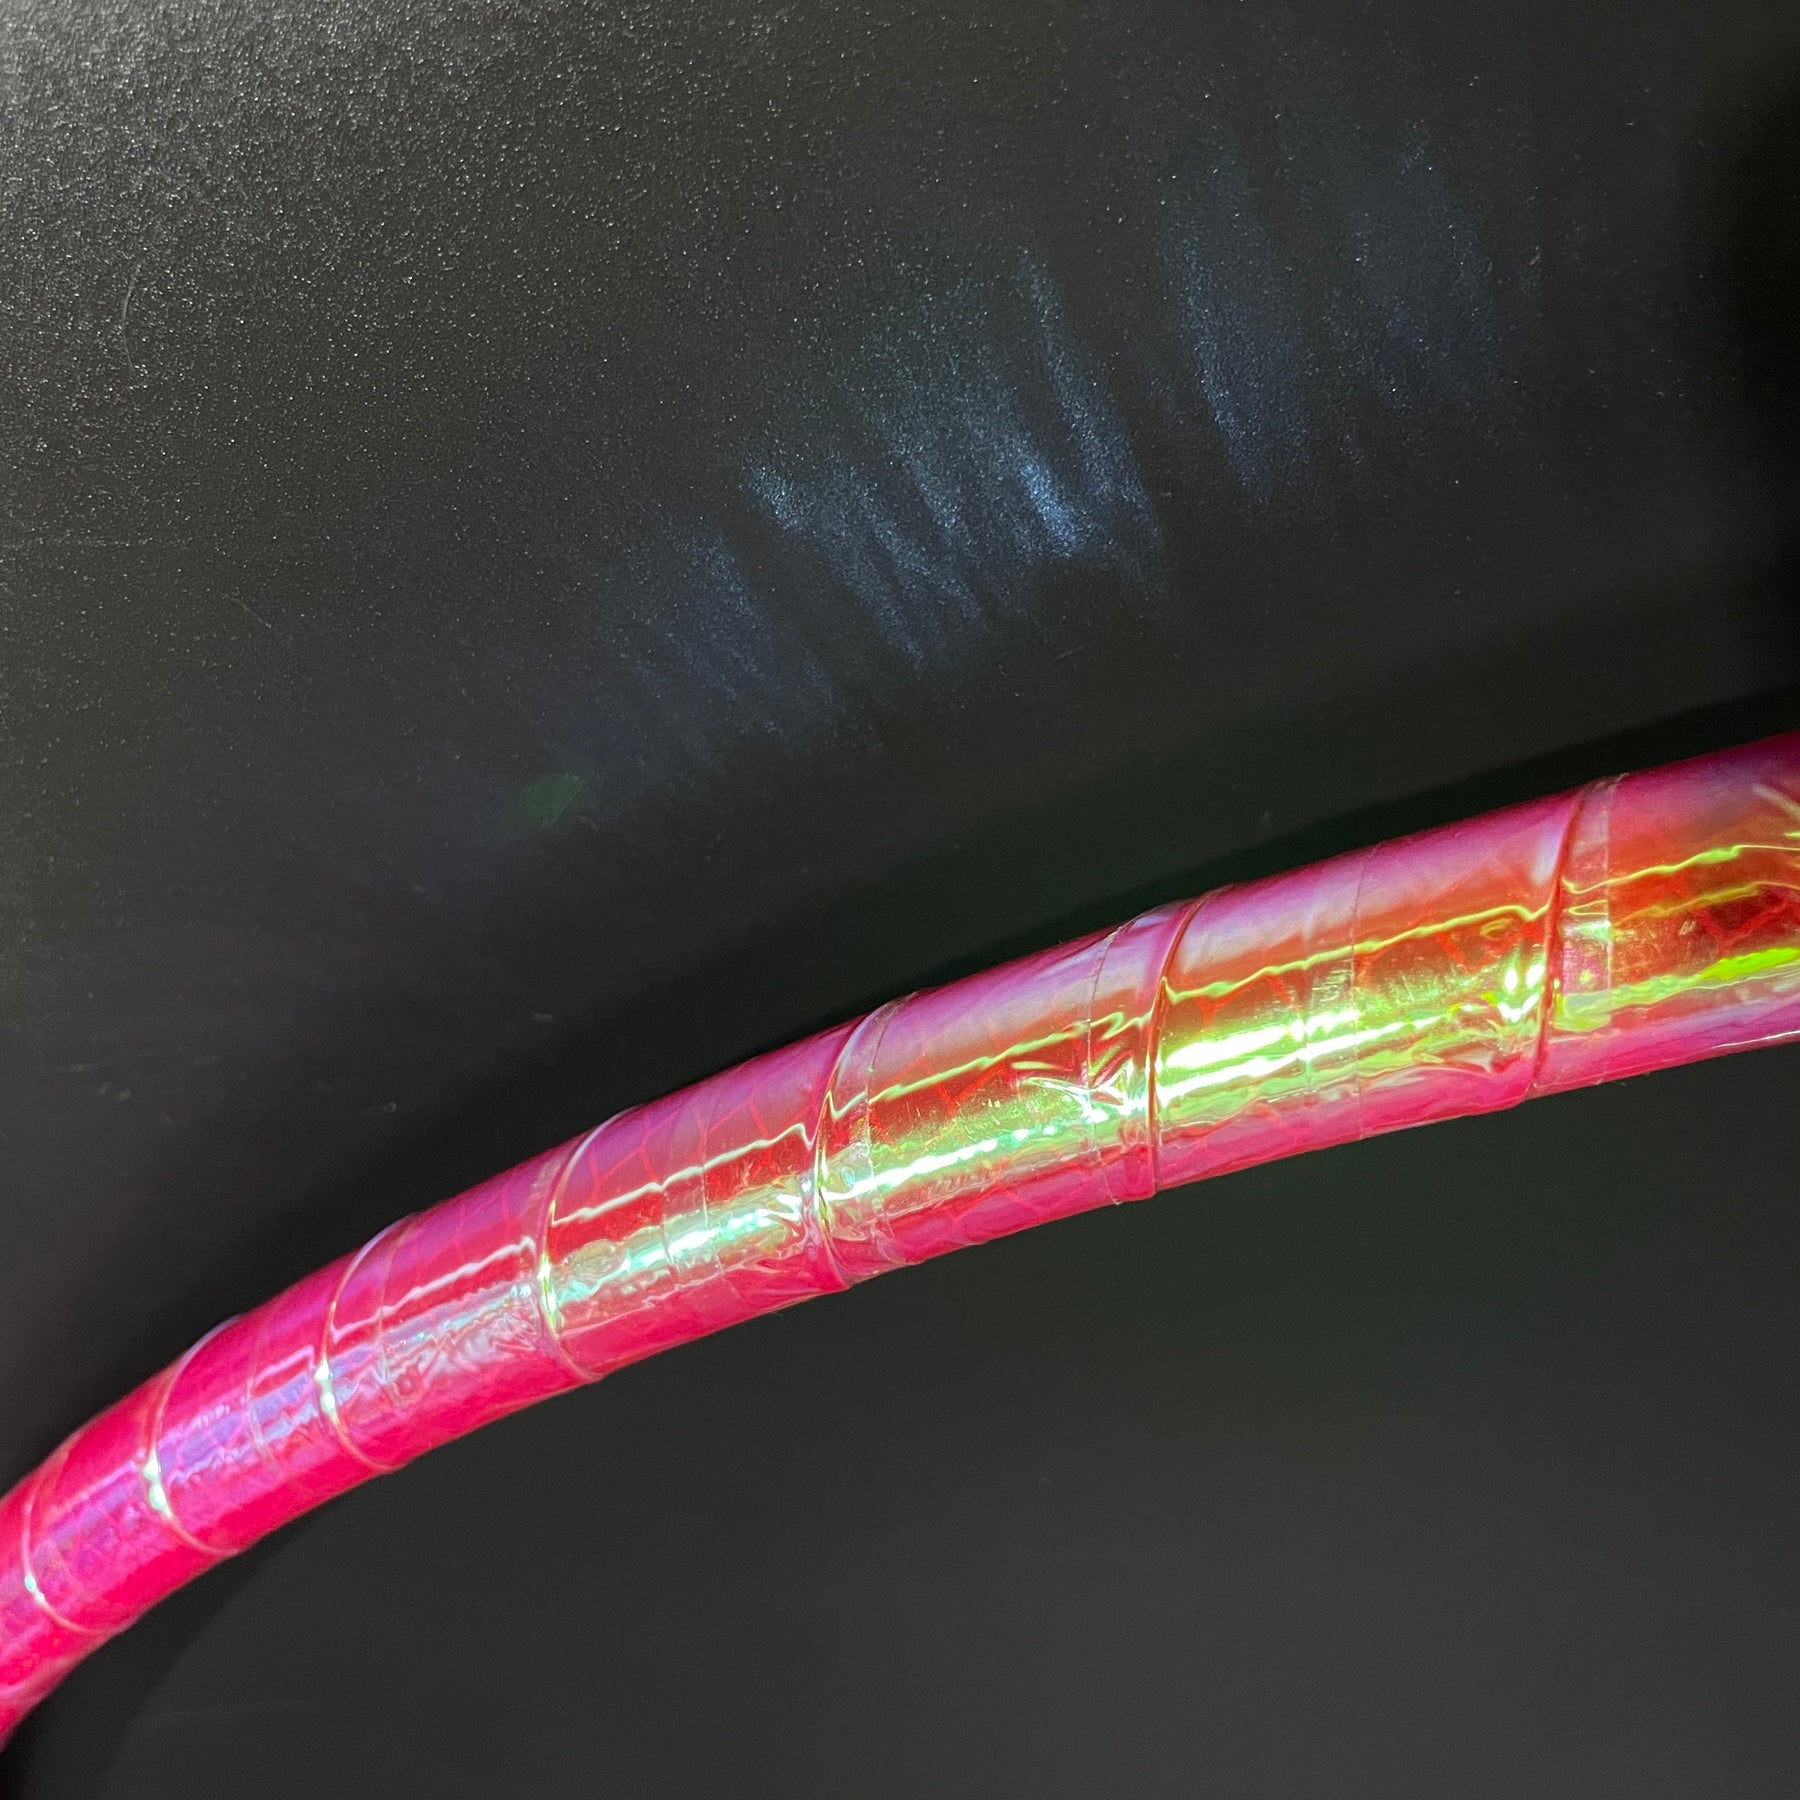 Bubblegum Pink Electrical Tape - Hoop Tape Canada